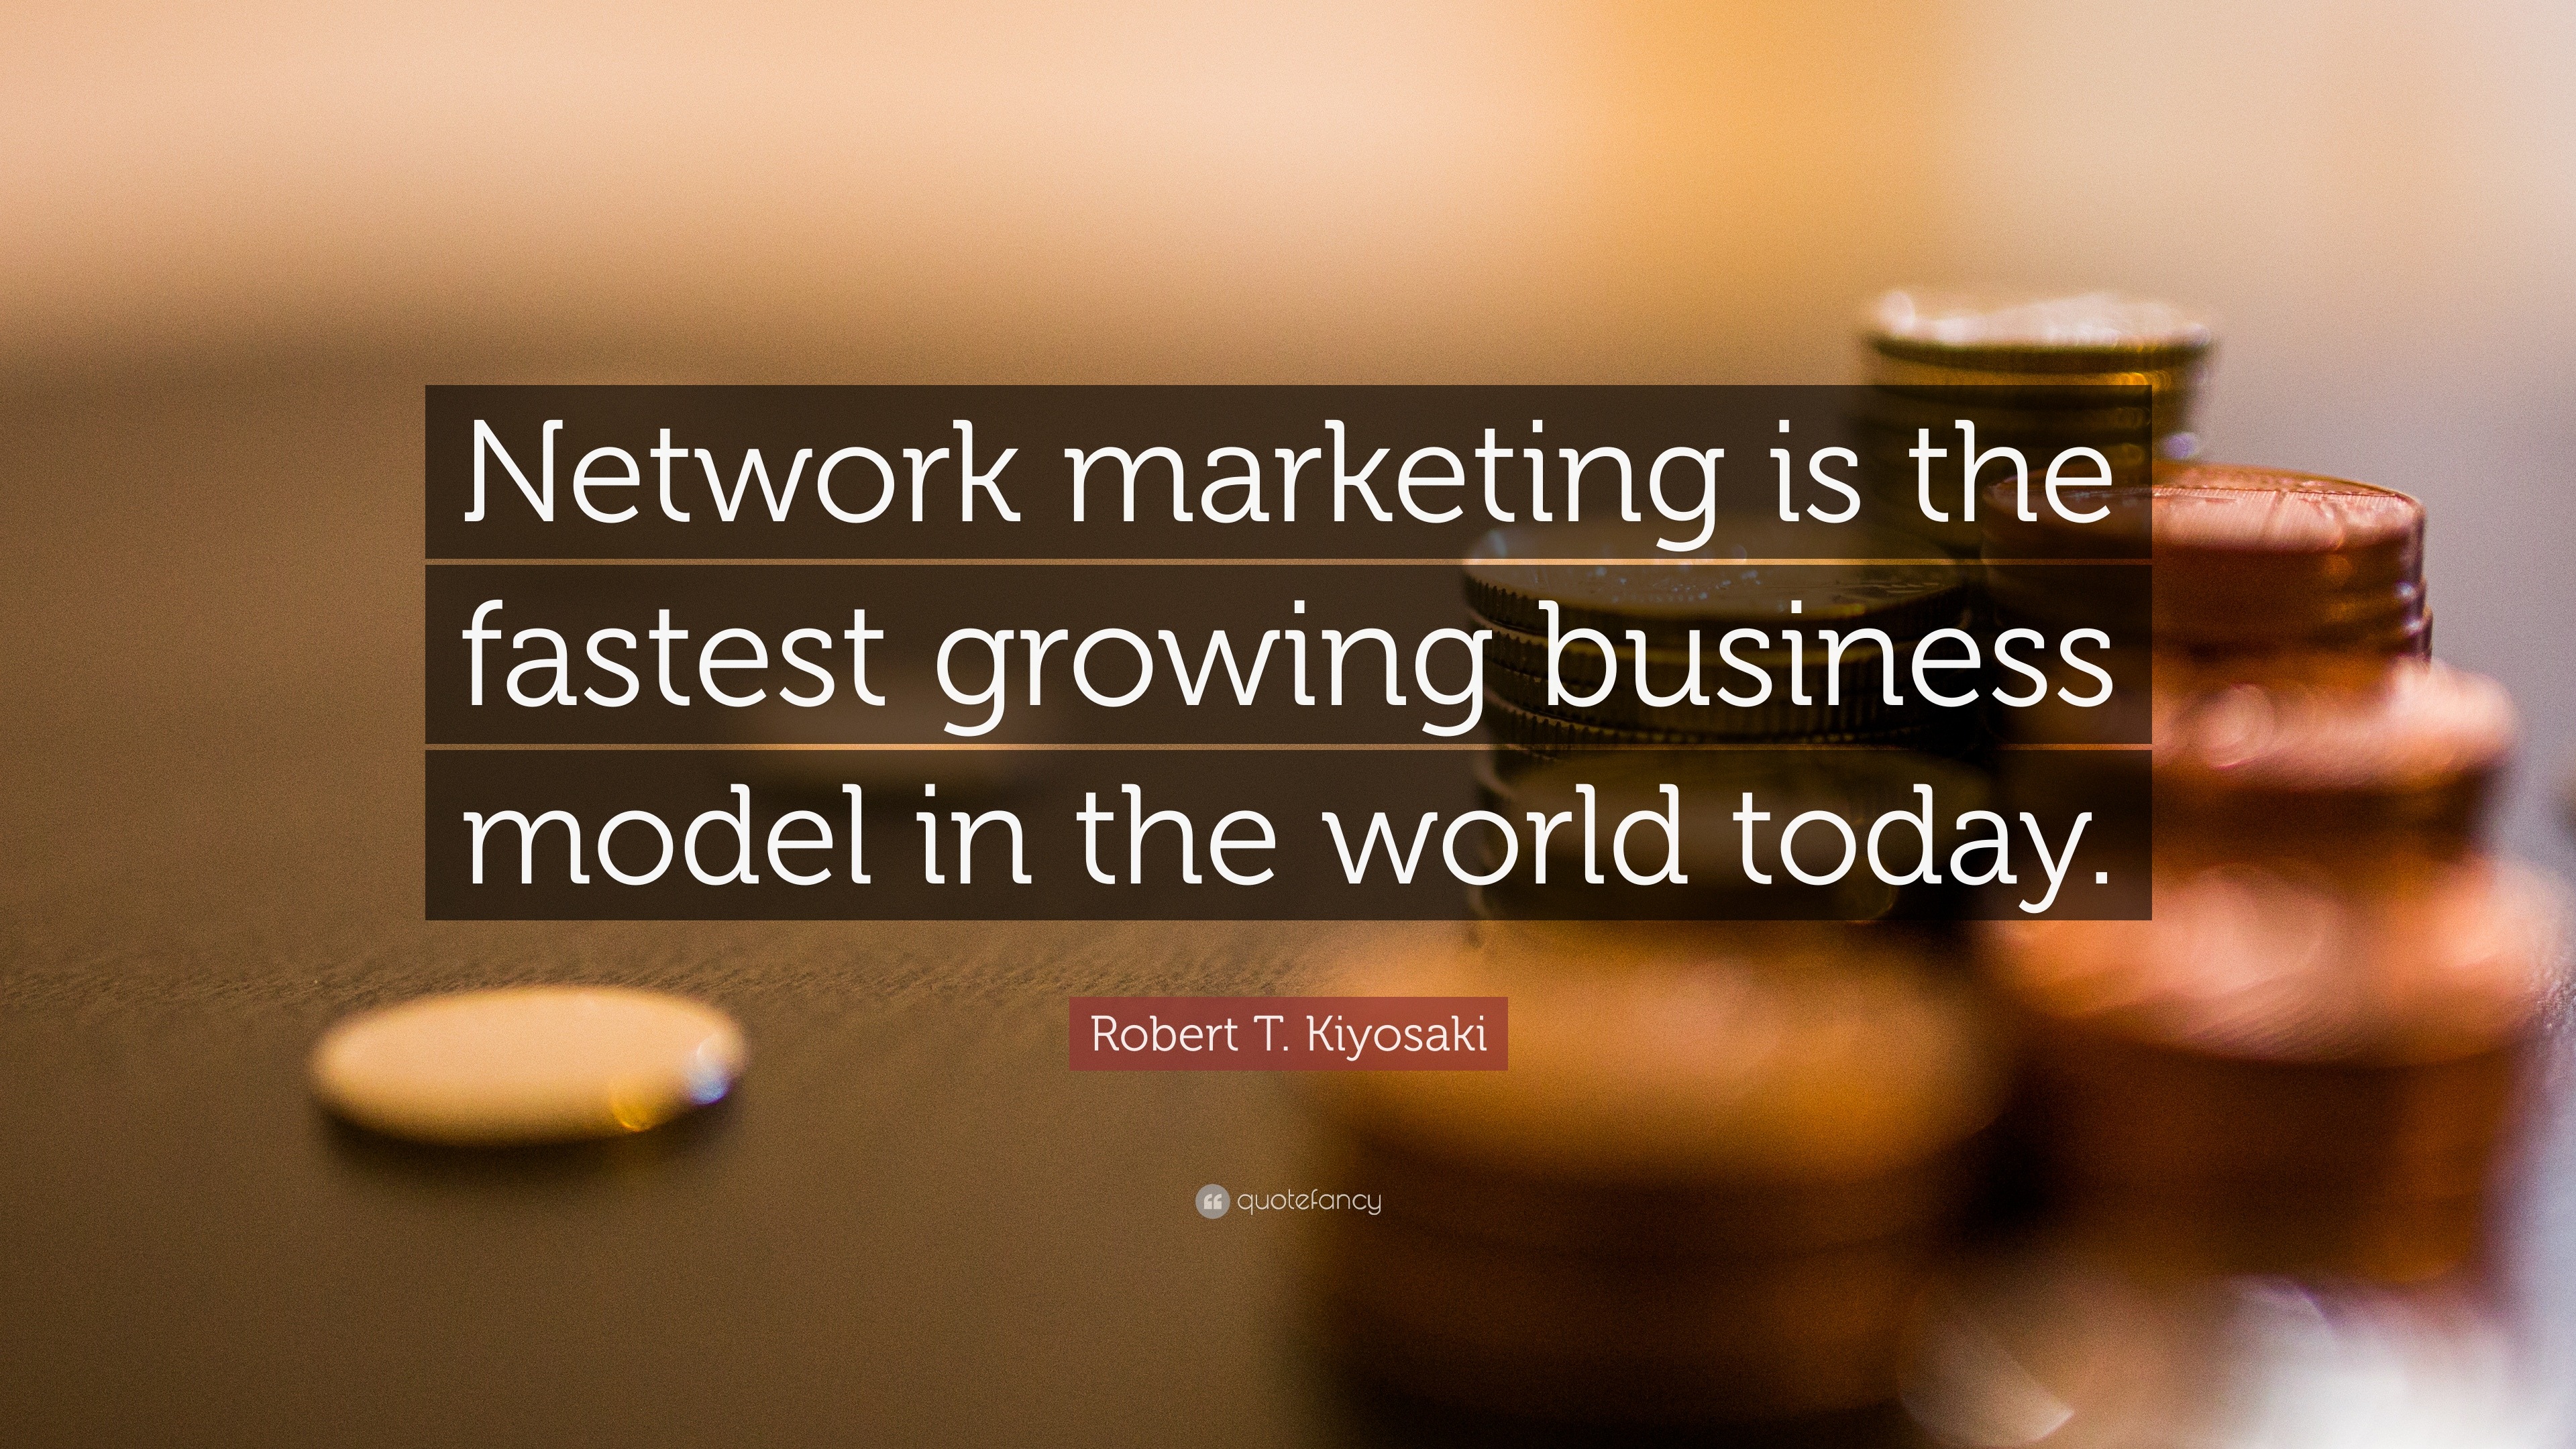 206661 Robert T Kiyosaki Quote Network marketing is the fastest growing